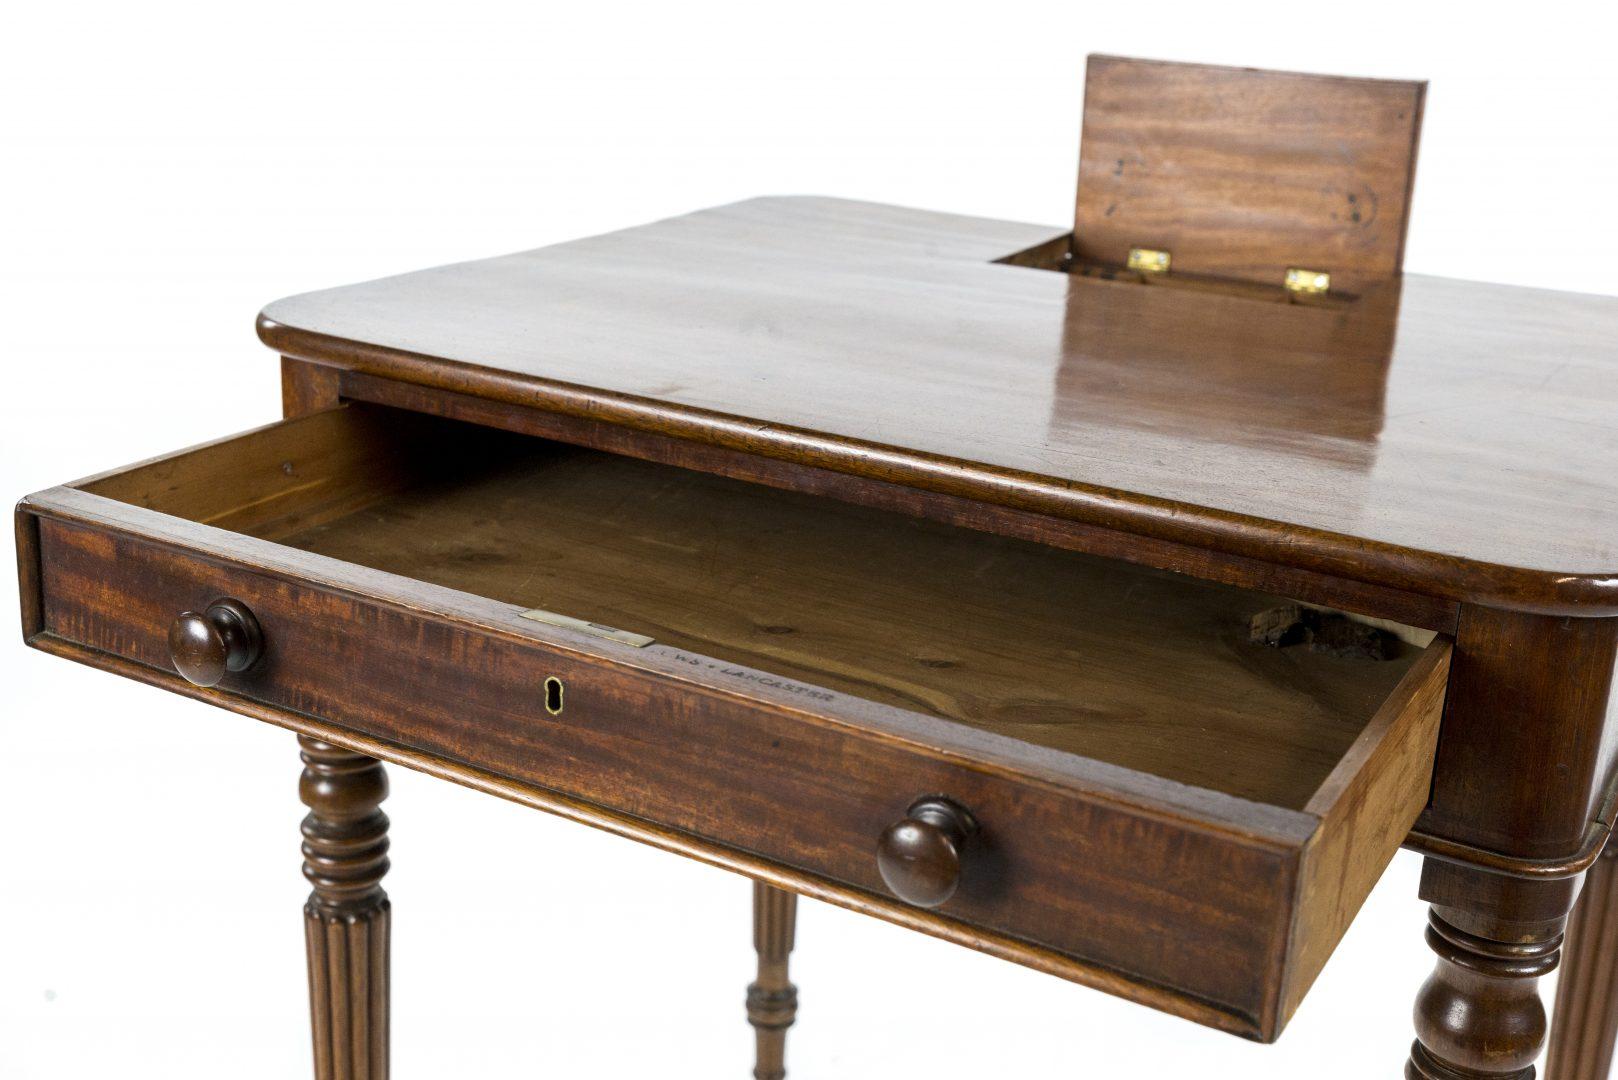 British Regency Mahogany Writing Table, Signed ‘Gillows’